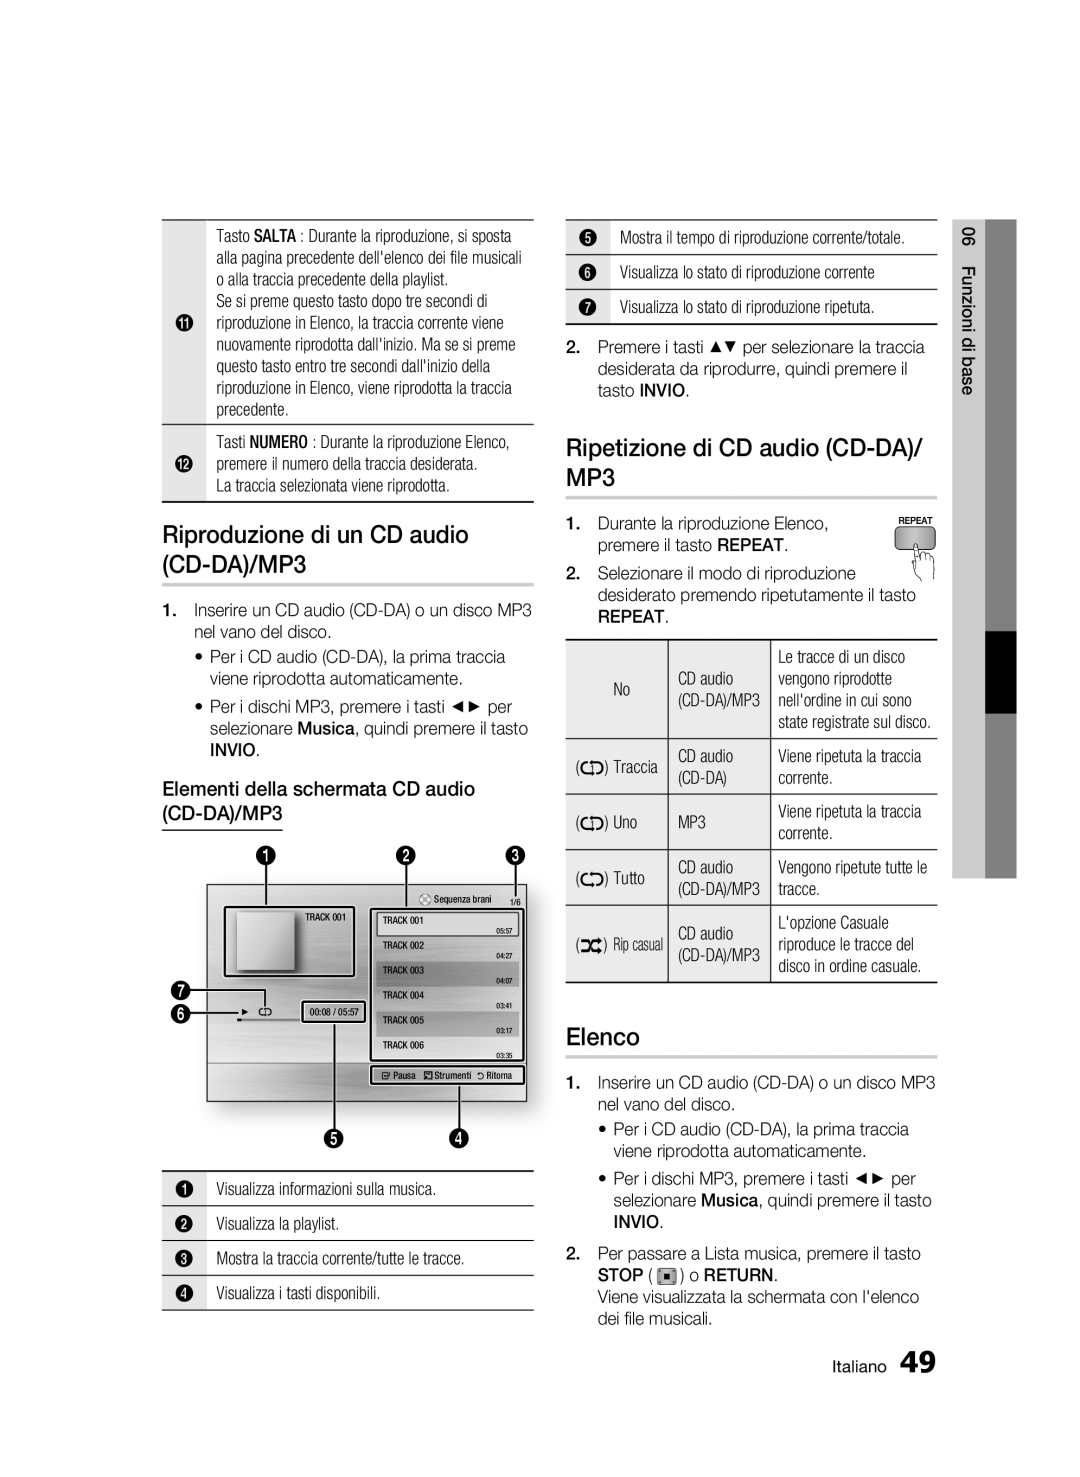 Samsung BD-C6500/XEF manual Riproduzione di un CD audio CD-DA/MP3, Ripetizione di CD audio CD-DA/ MP3, Elenco 